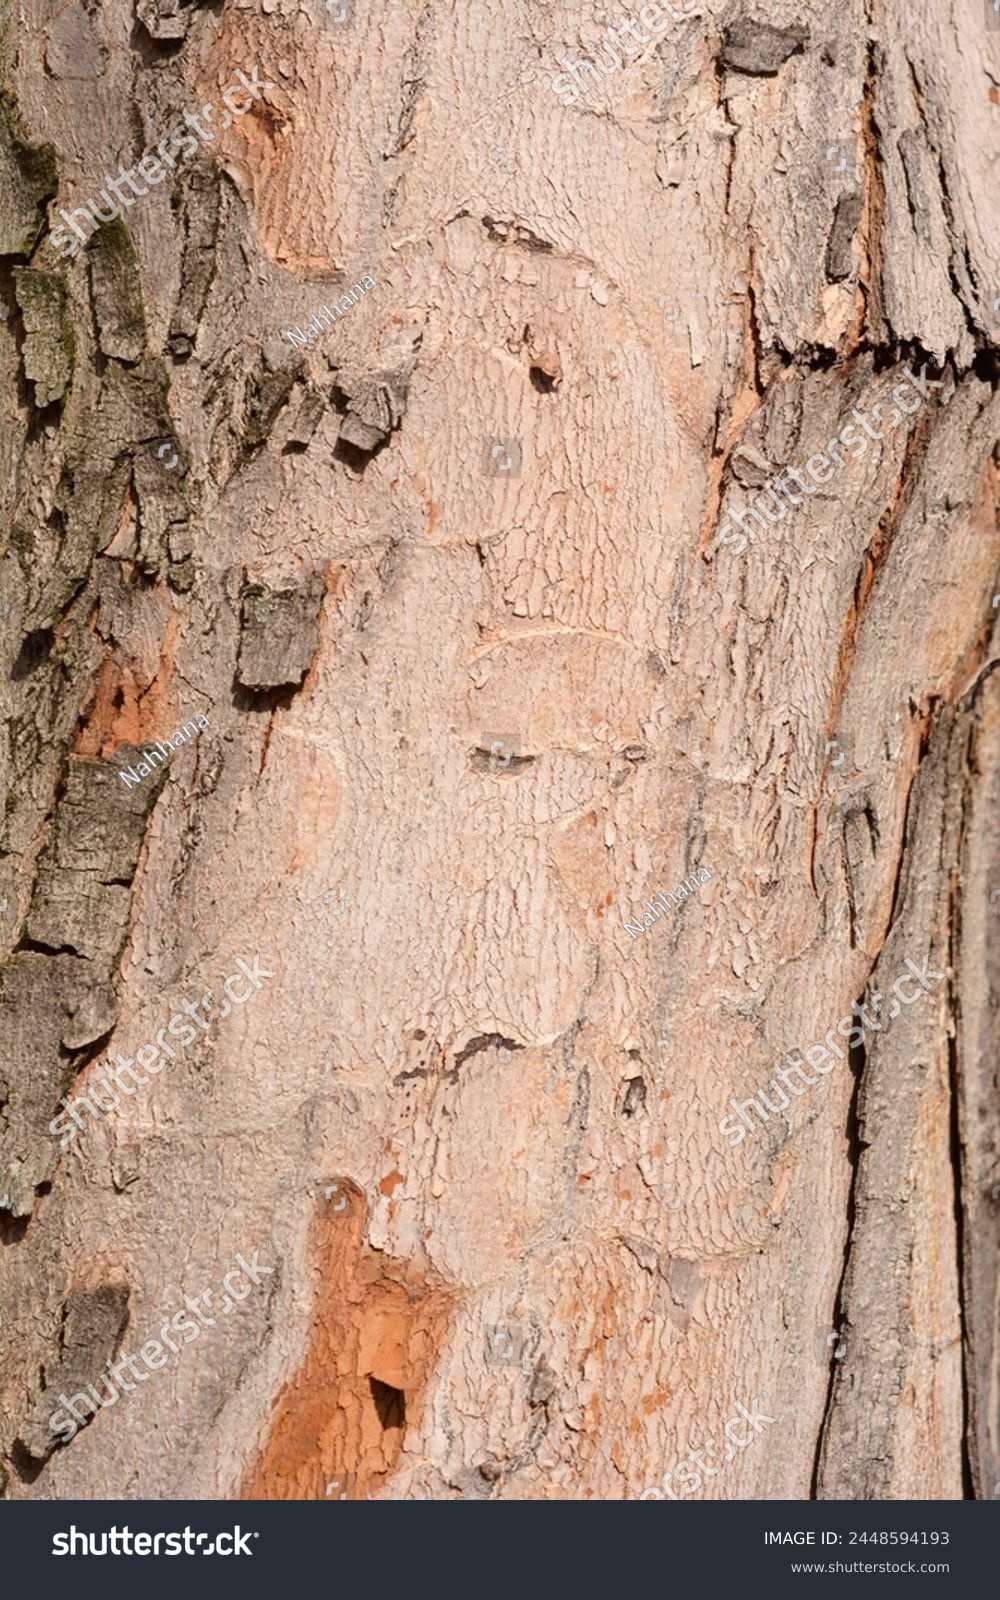 Silver maple bark detail - Latin name - Acer saccharinum #2448594193